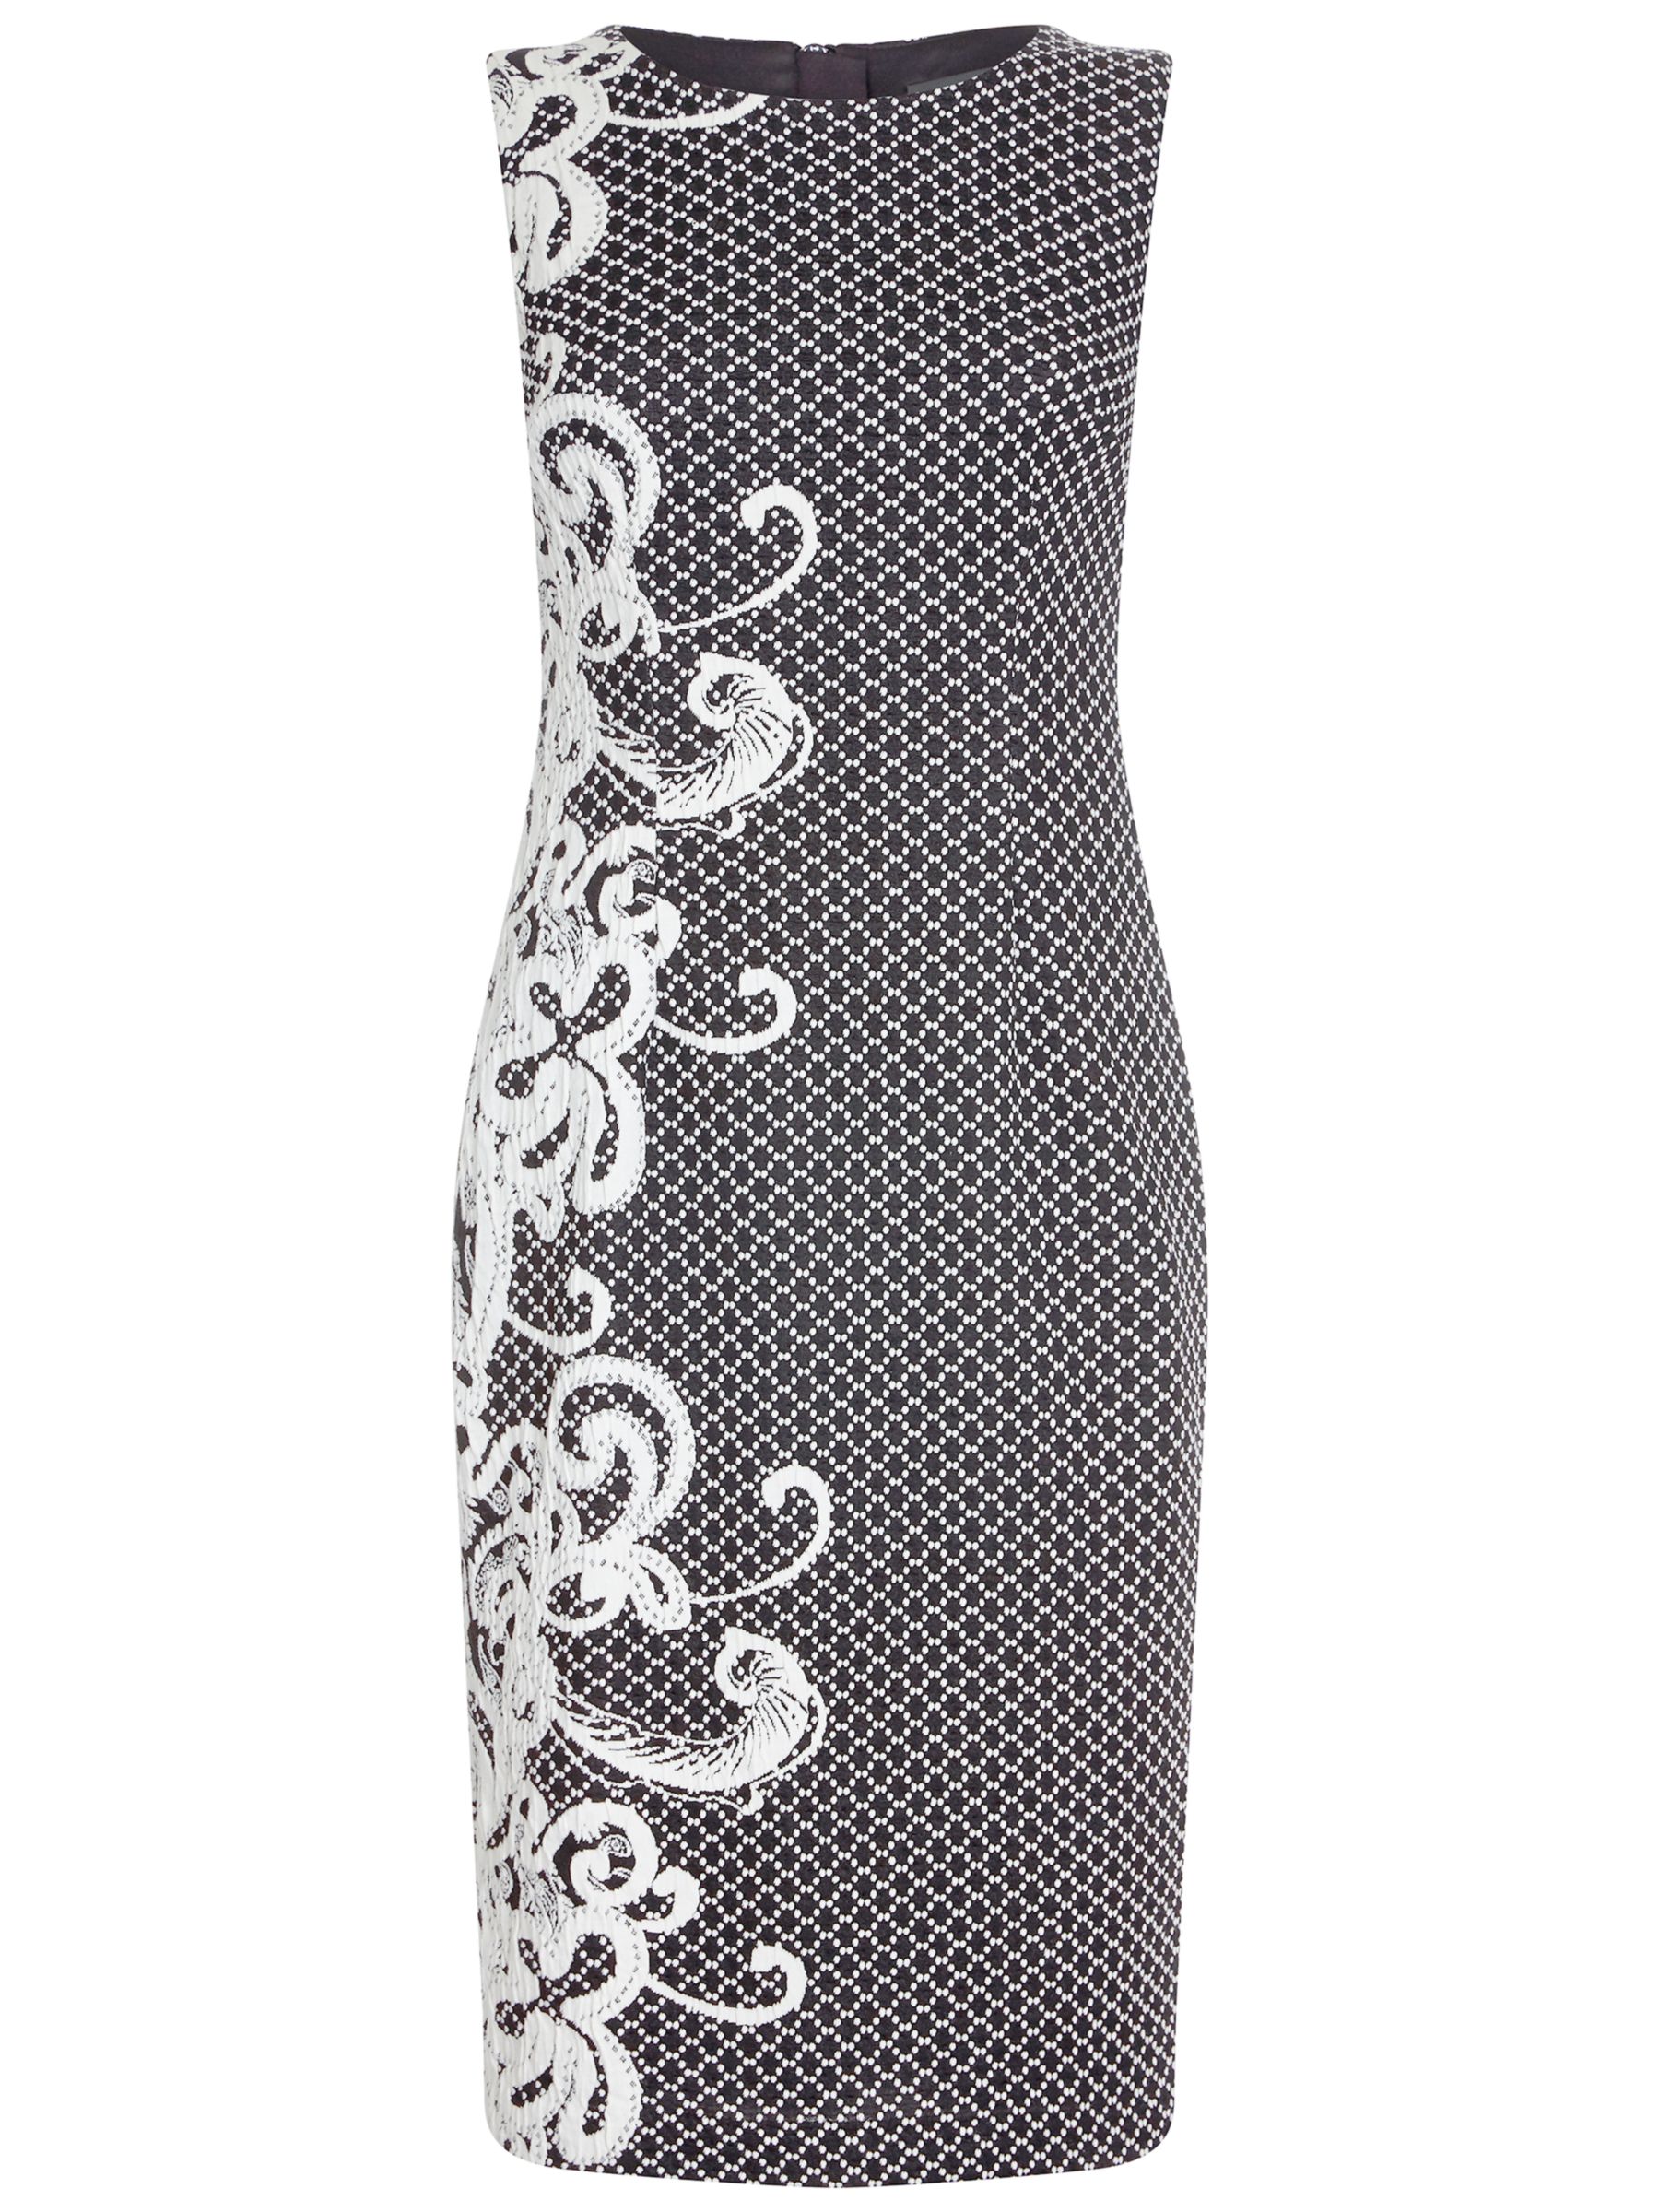 Adrianna Papell Scroll Border Dress, Black/Ivory